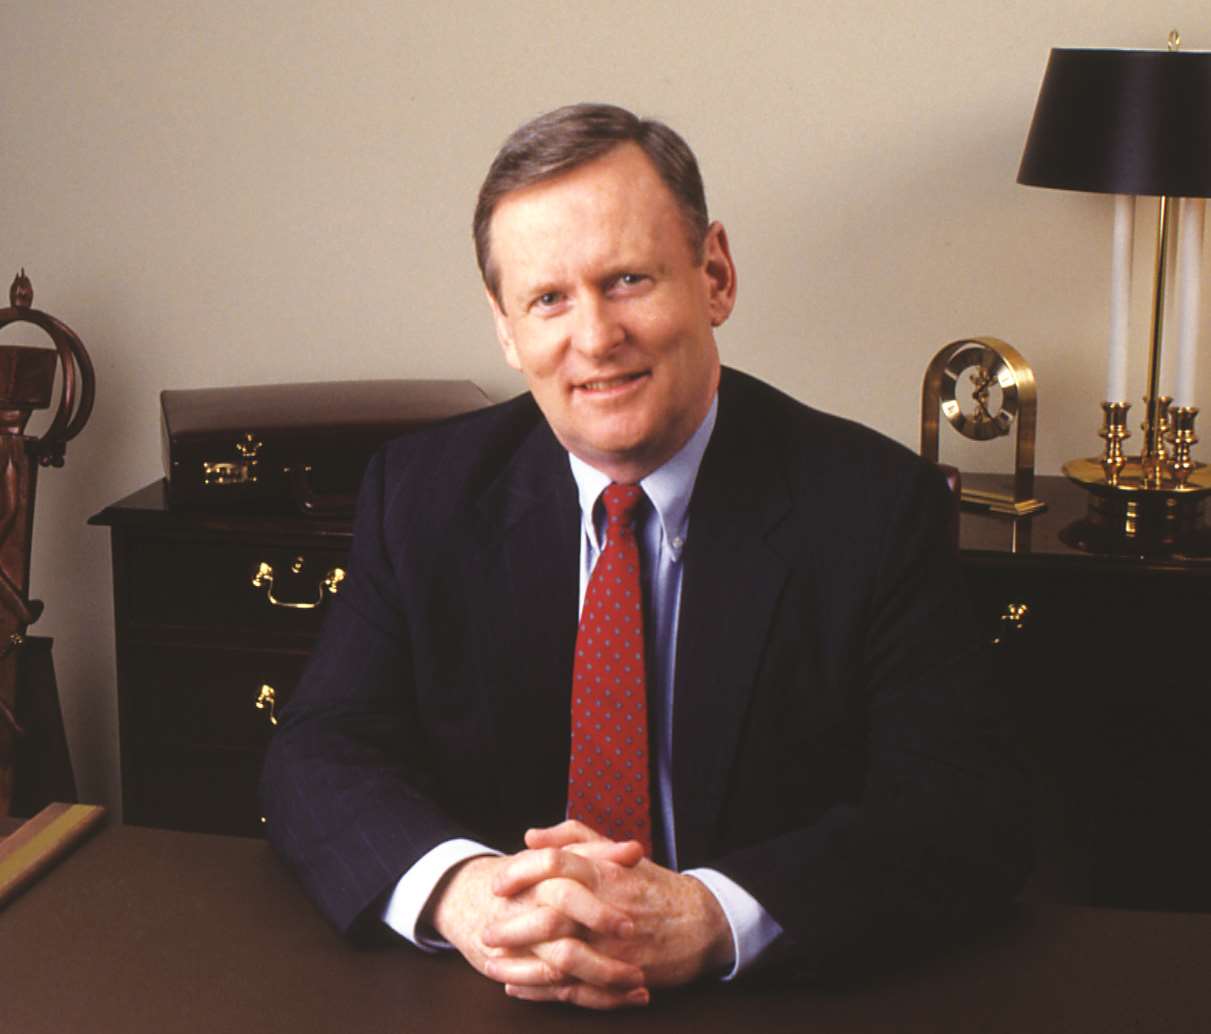 Mike Bolger named president of MCW in 1990